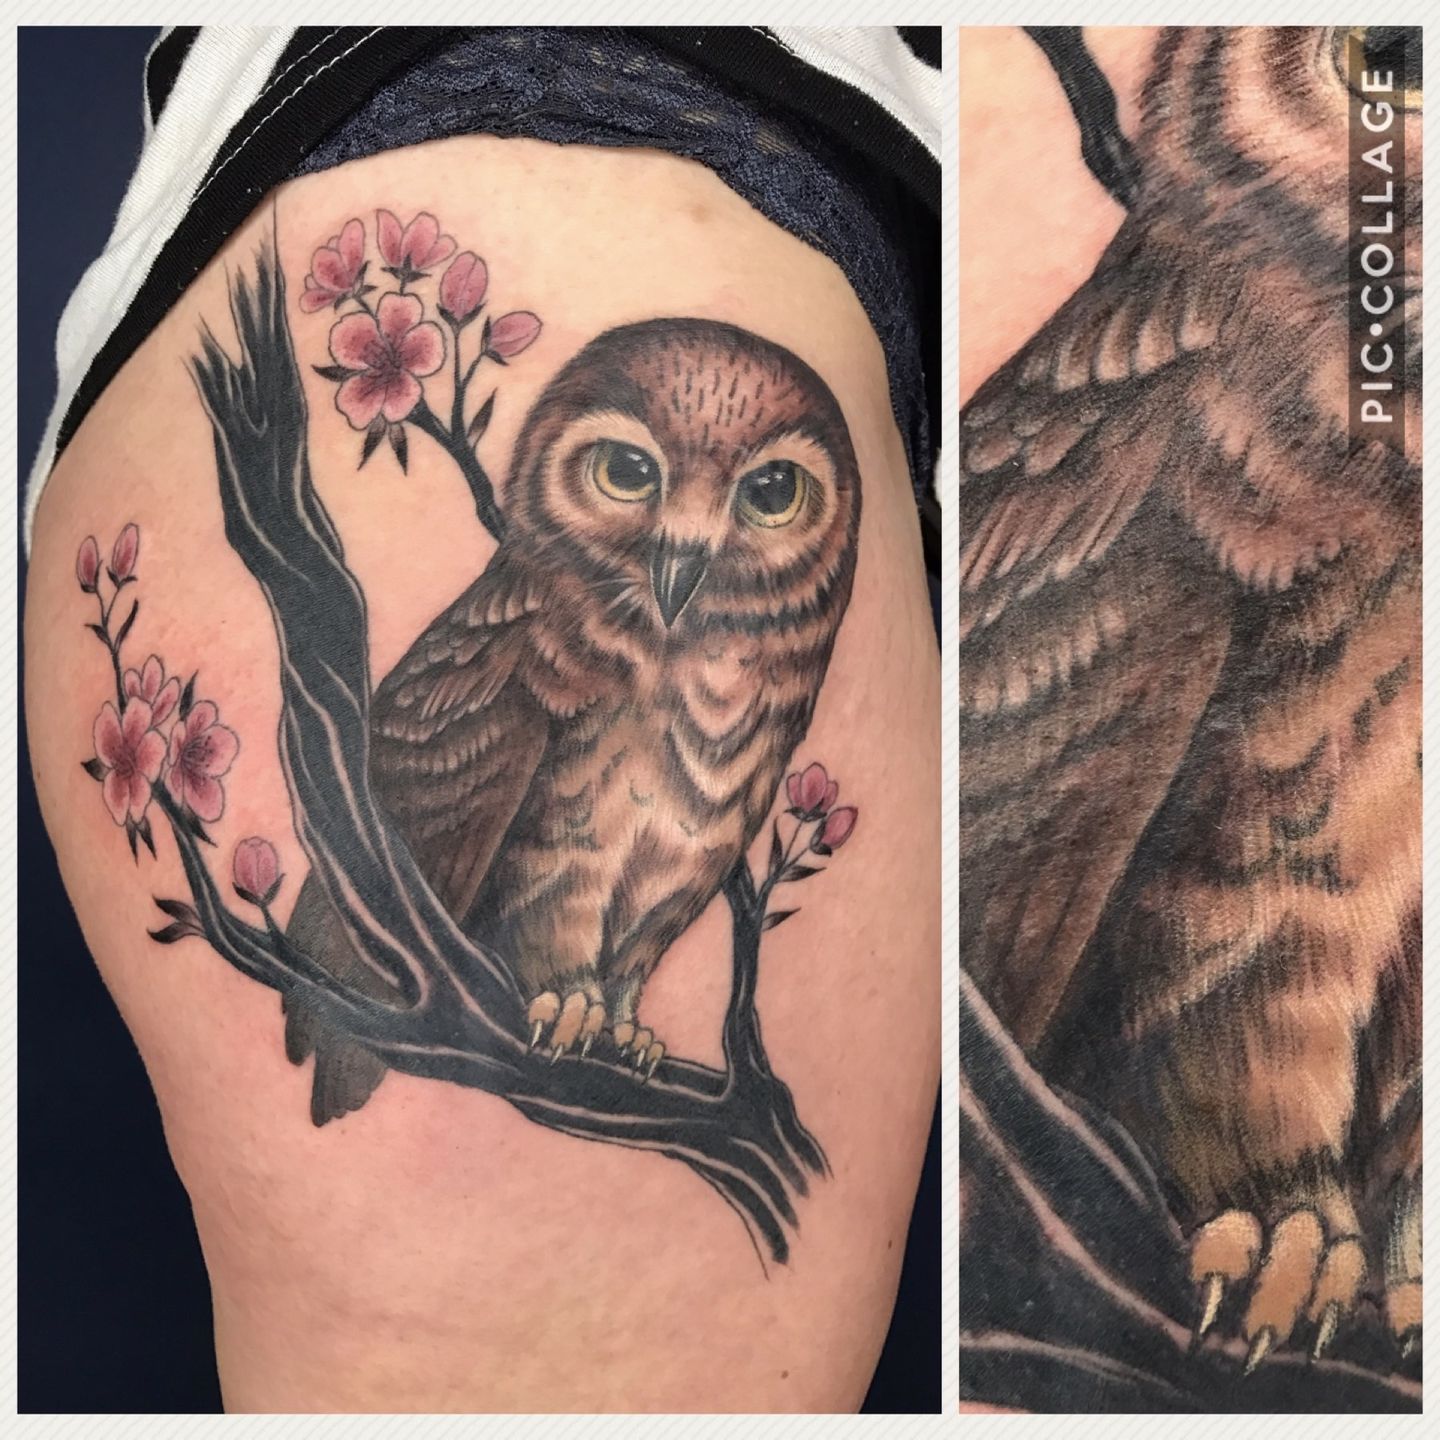 Artcastle Tattoo  Full Color  Owl tattoo in bright colors  Facebook